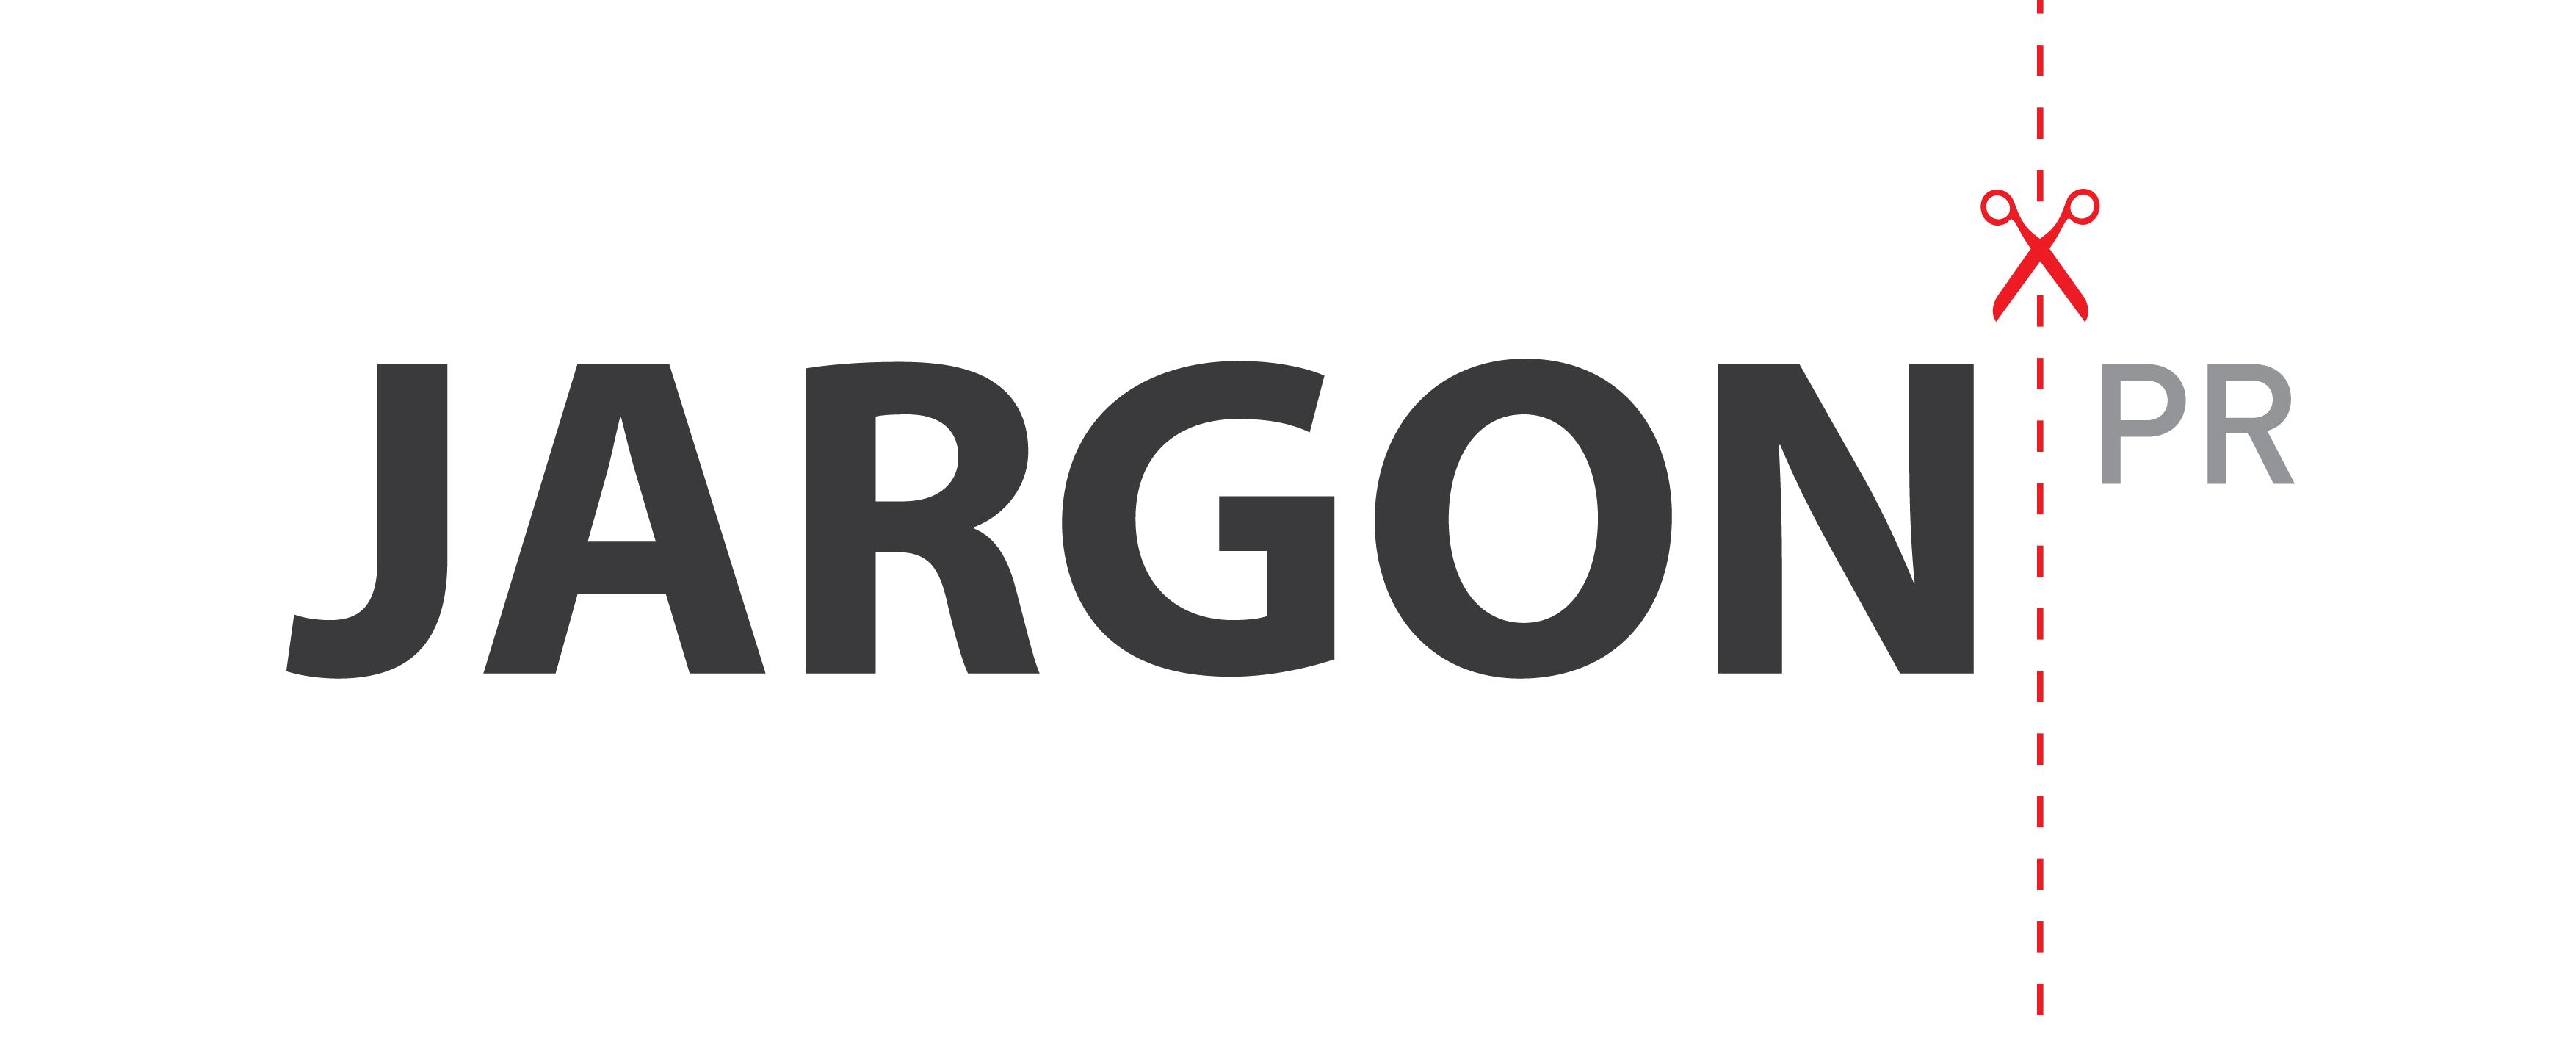 Jargon PR logo